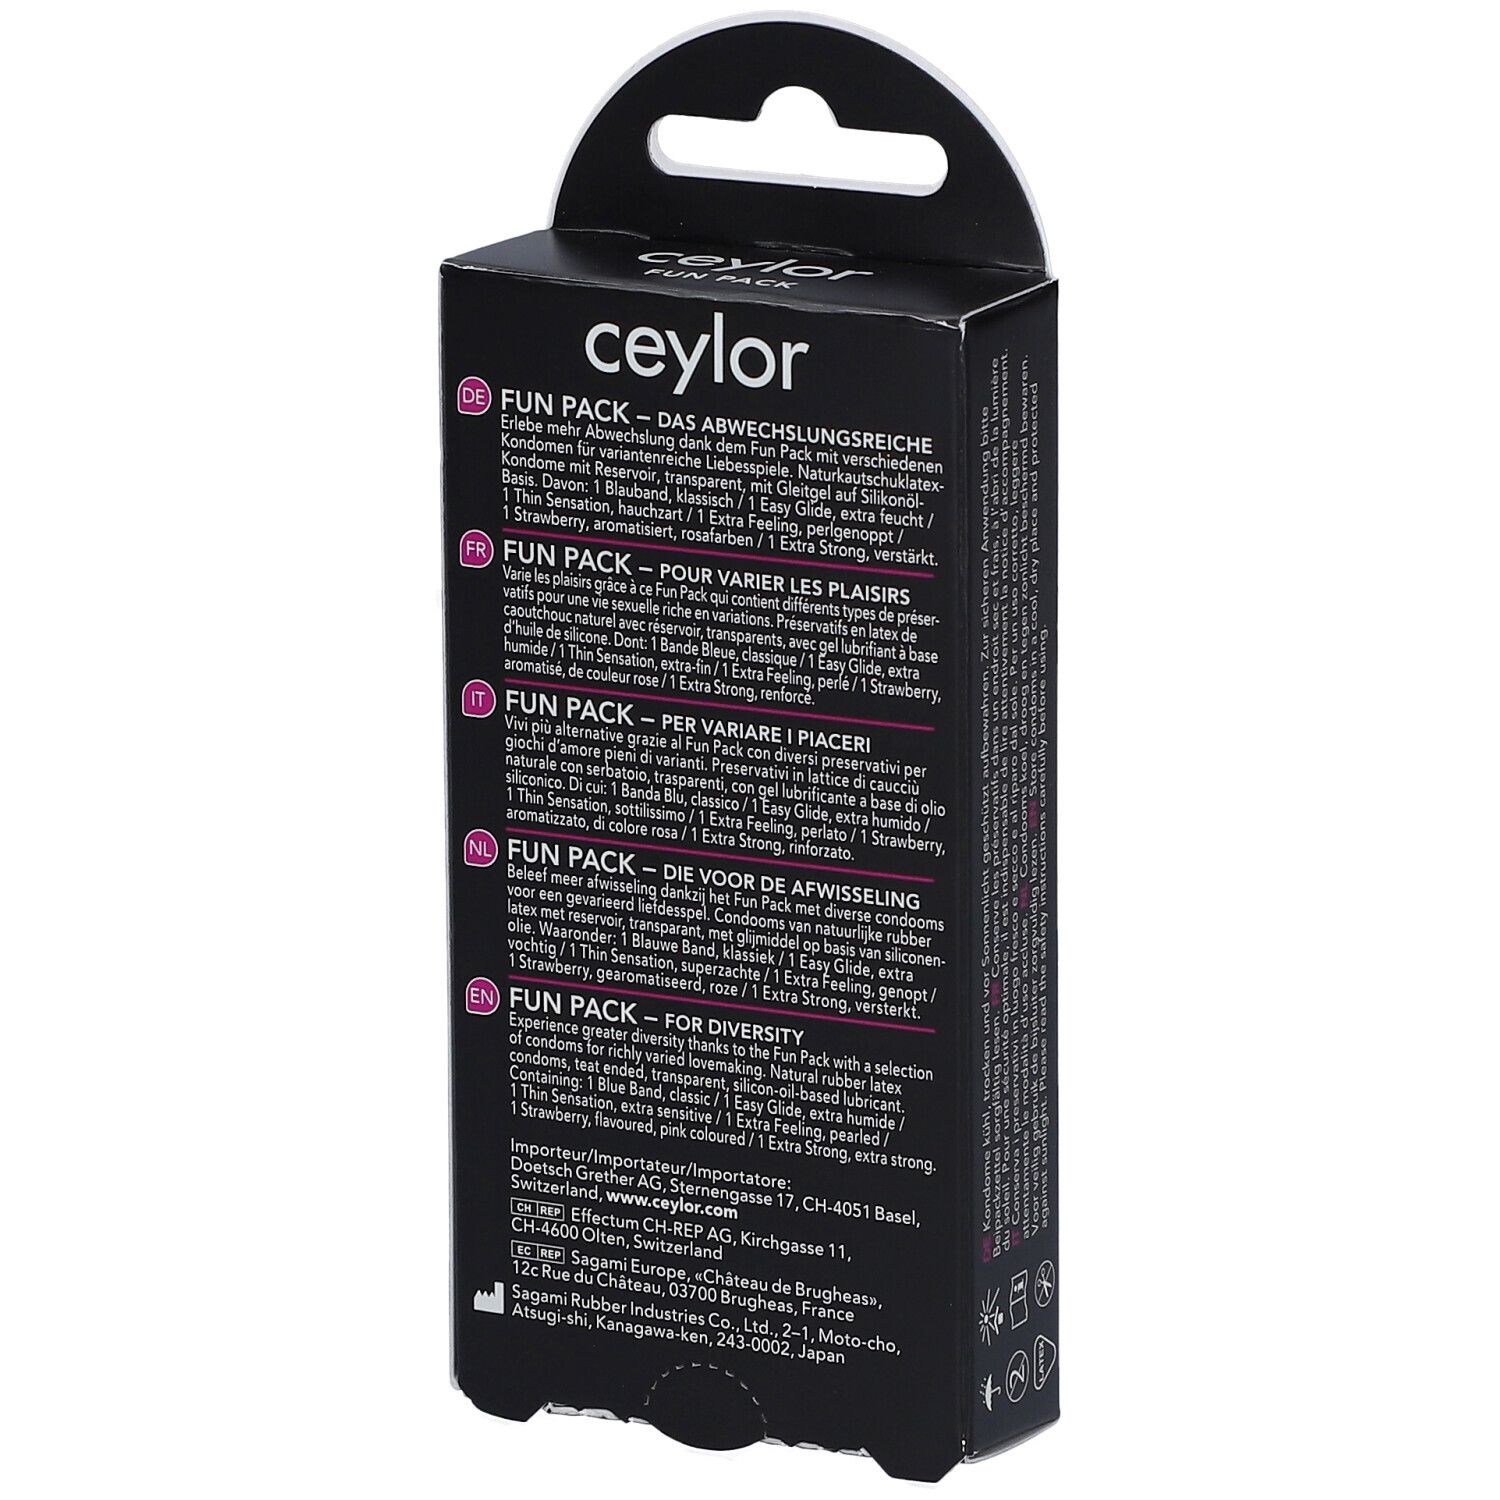 Ceylor Fun-Pack Kondome